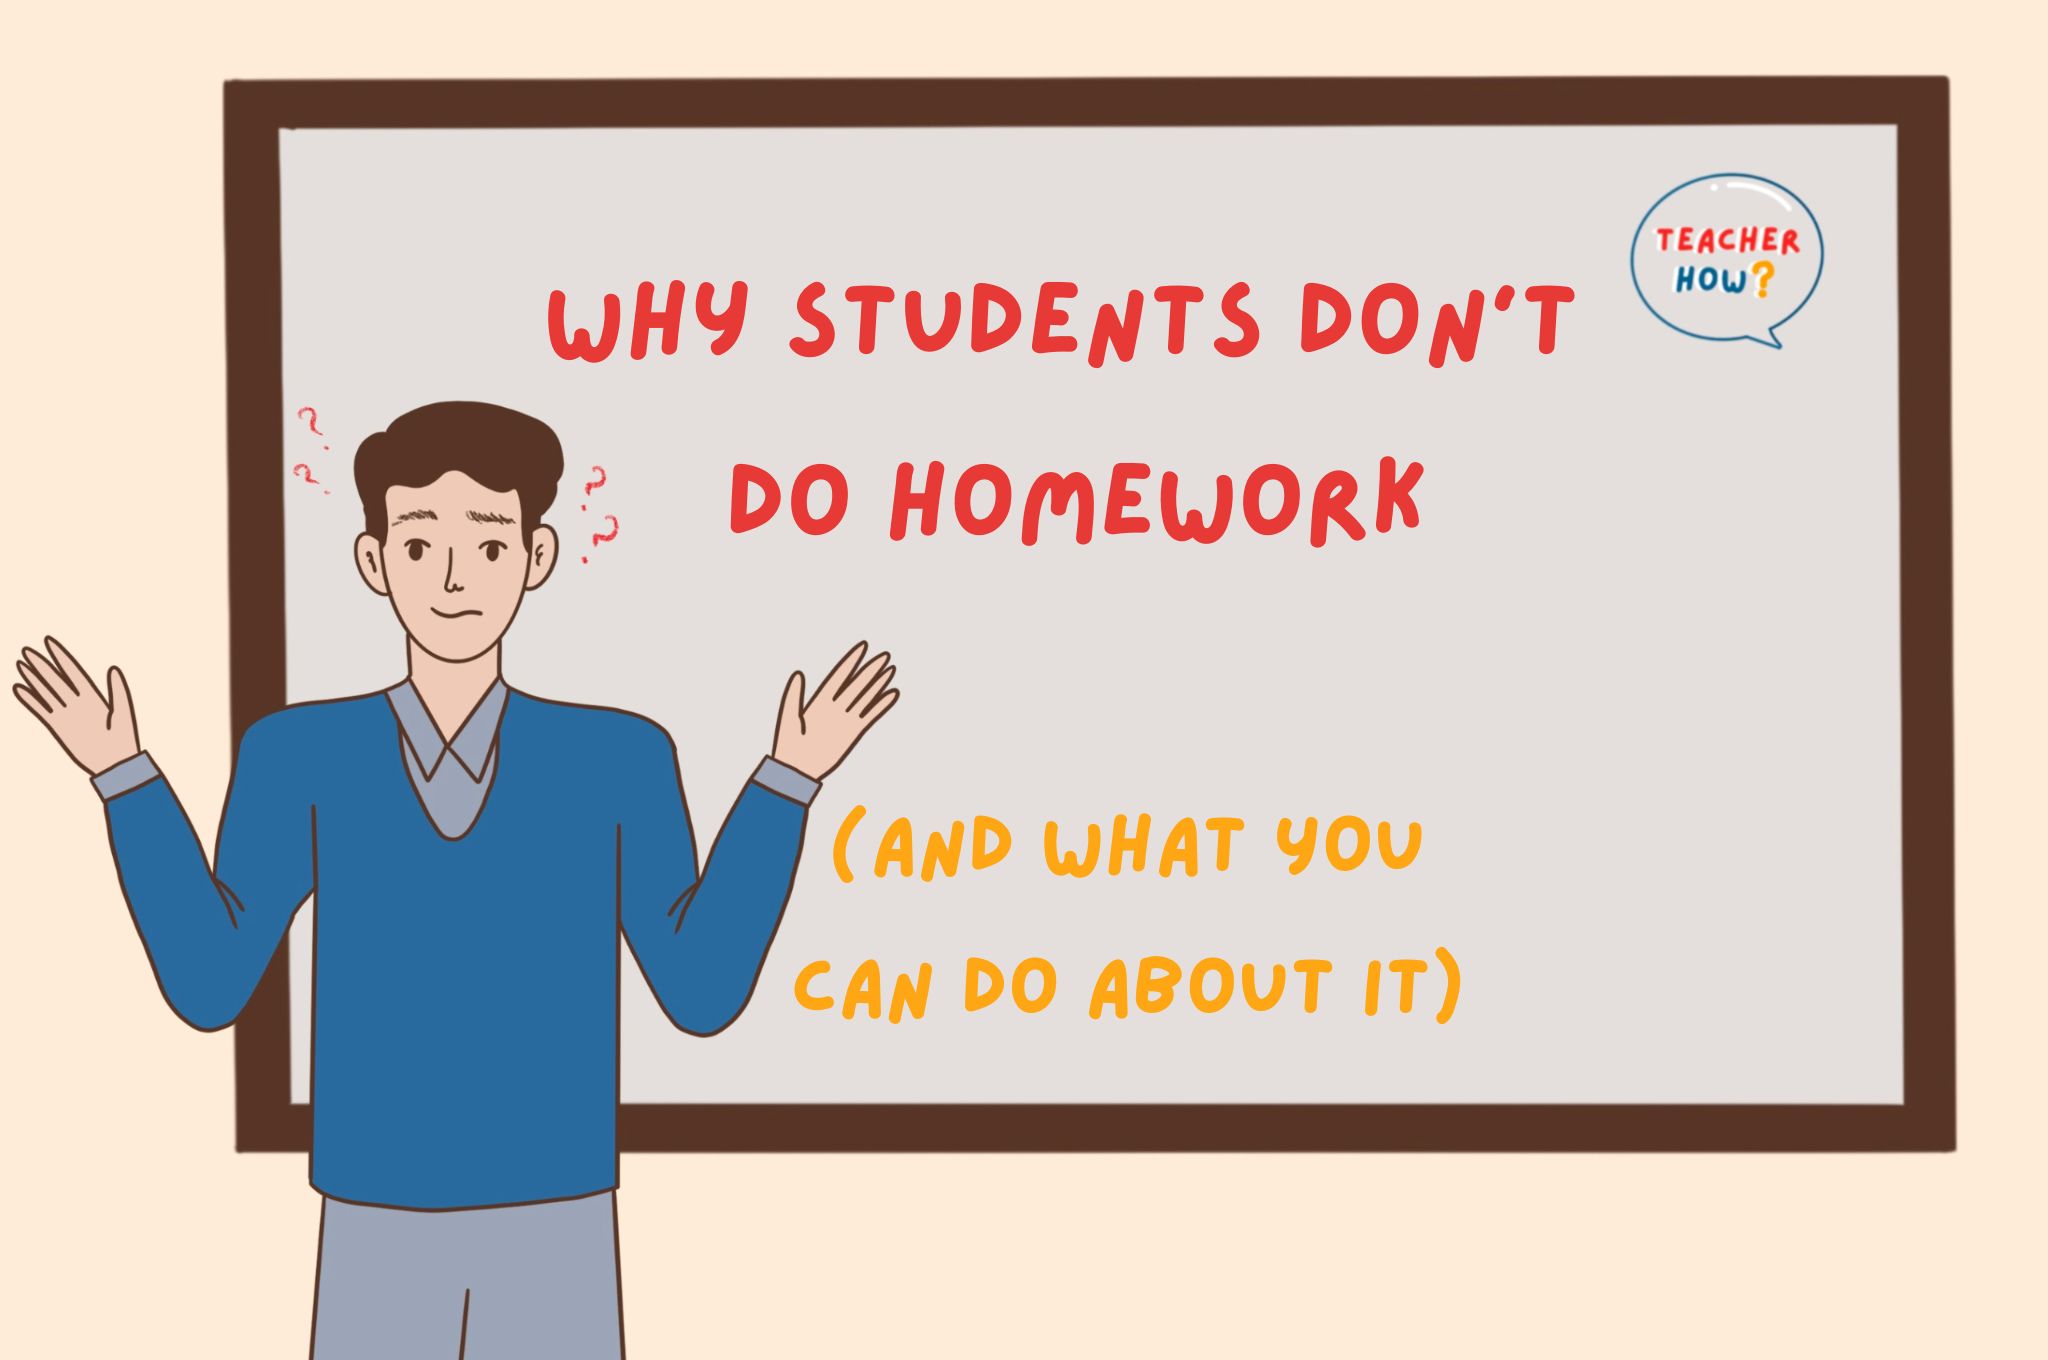 how can teachers reduce homework